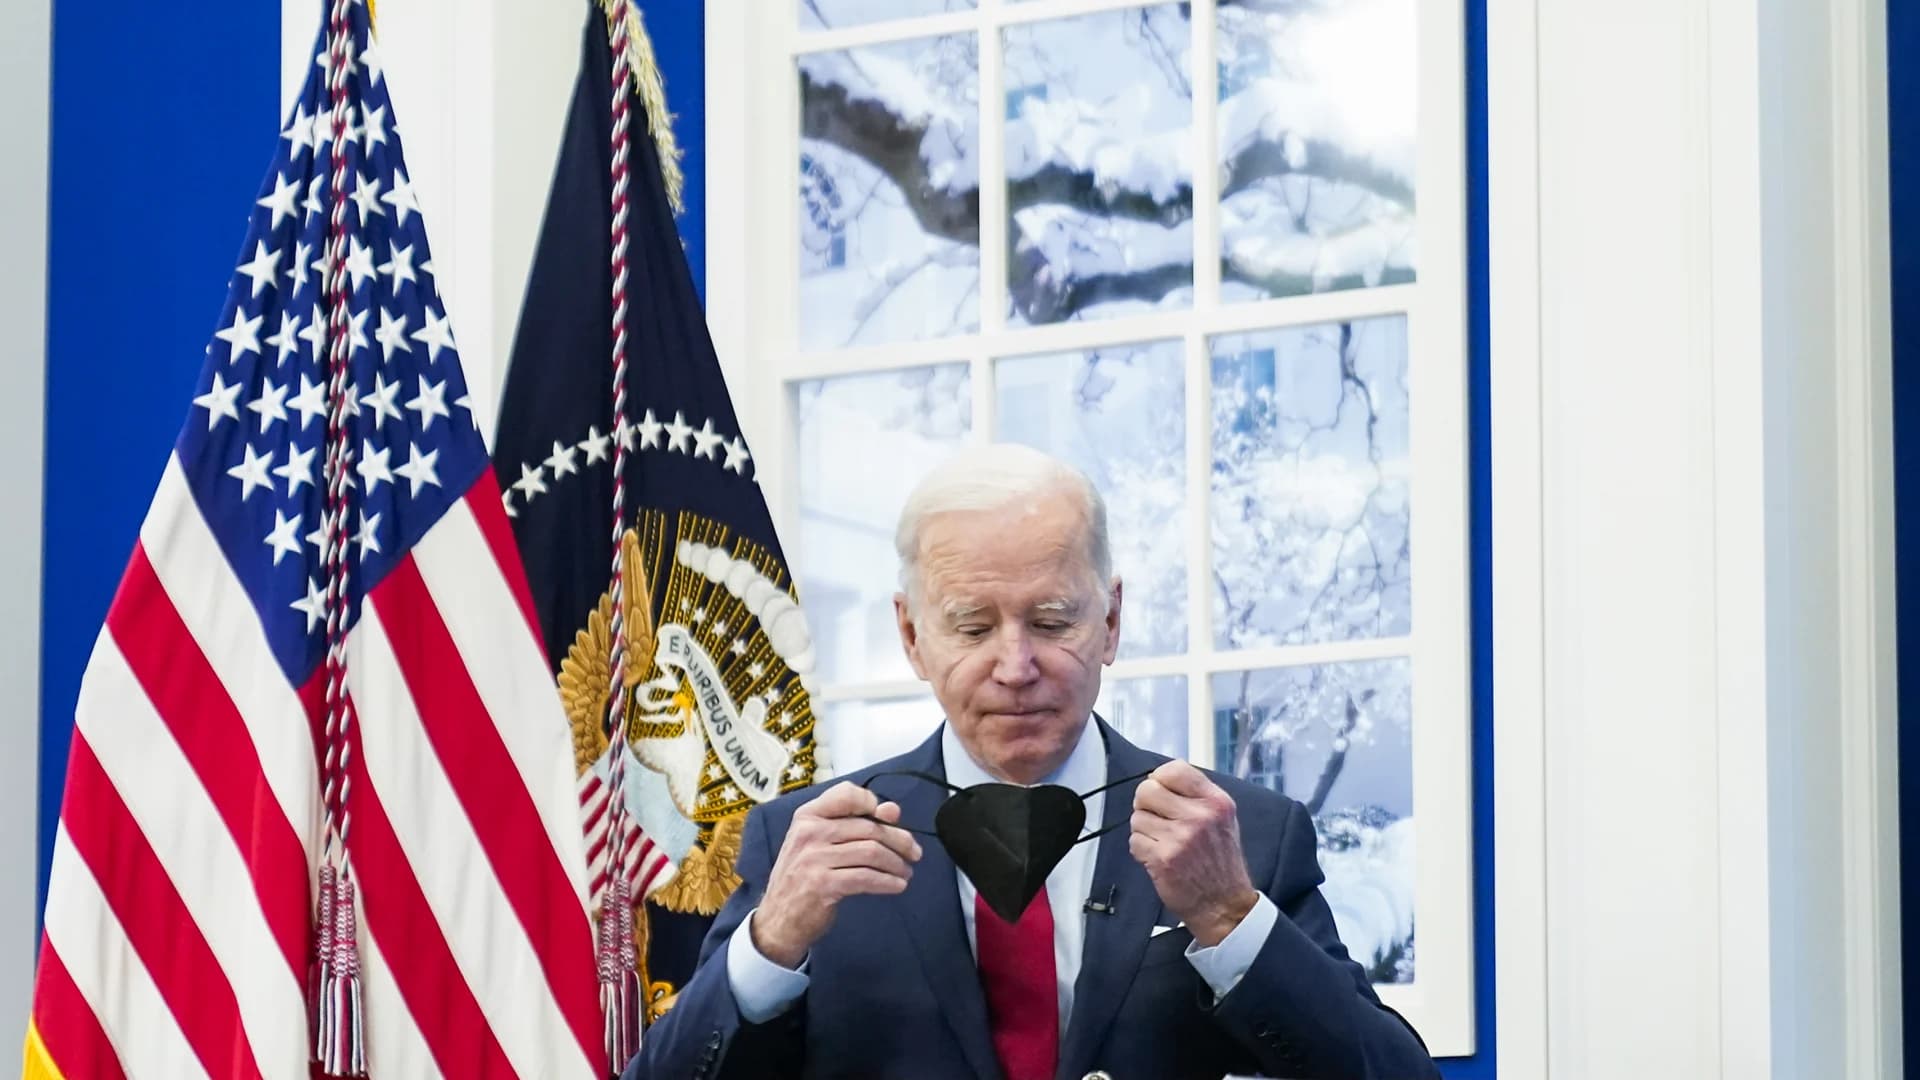 President Biden urges concern, not alarm as Omicron rises